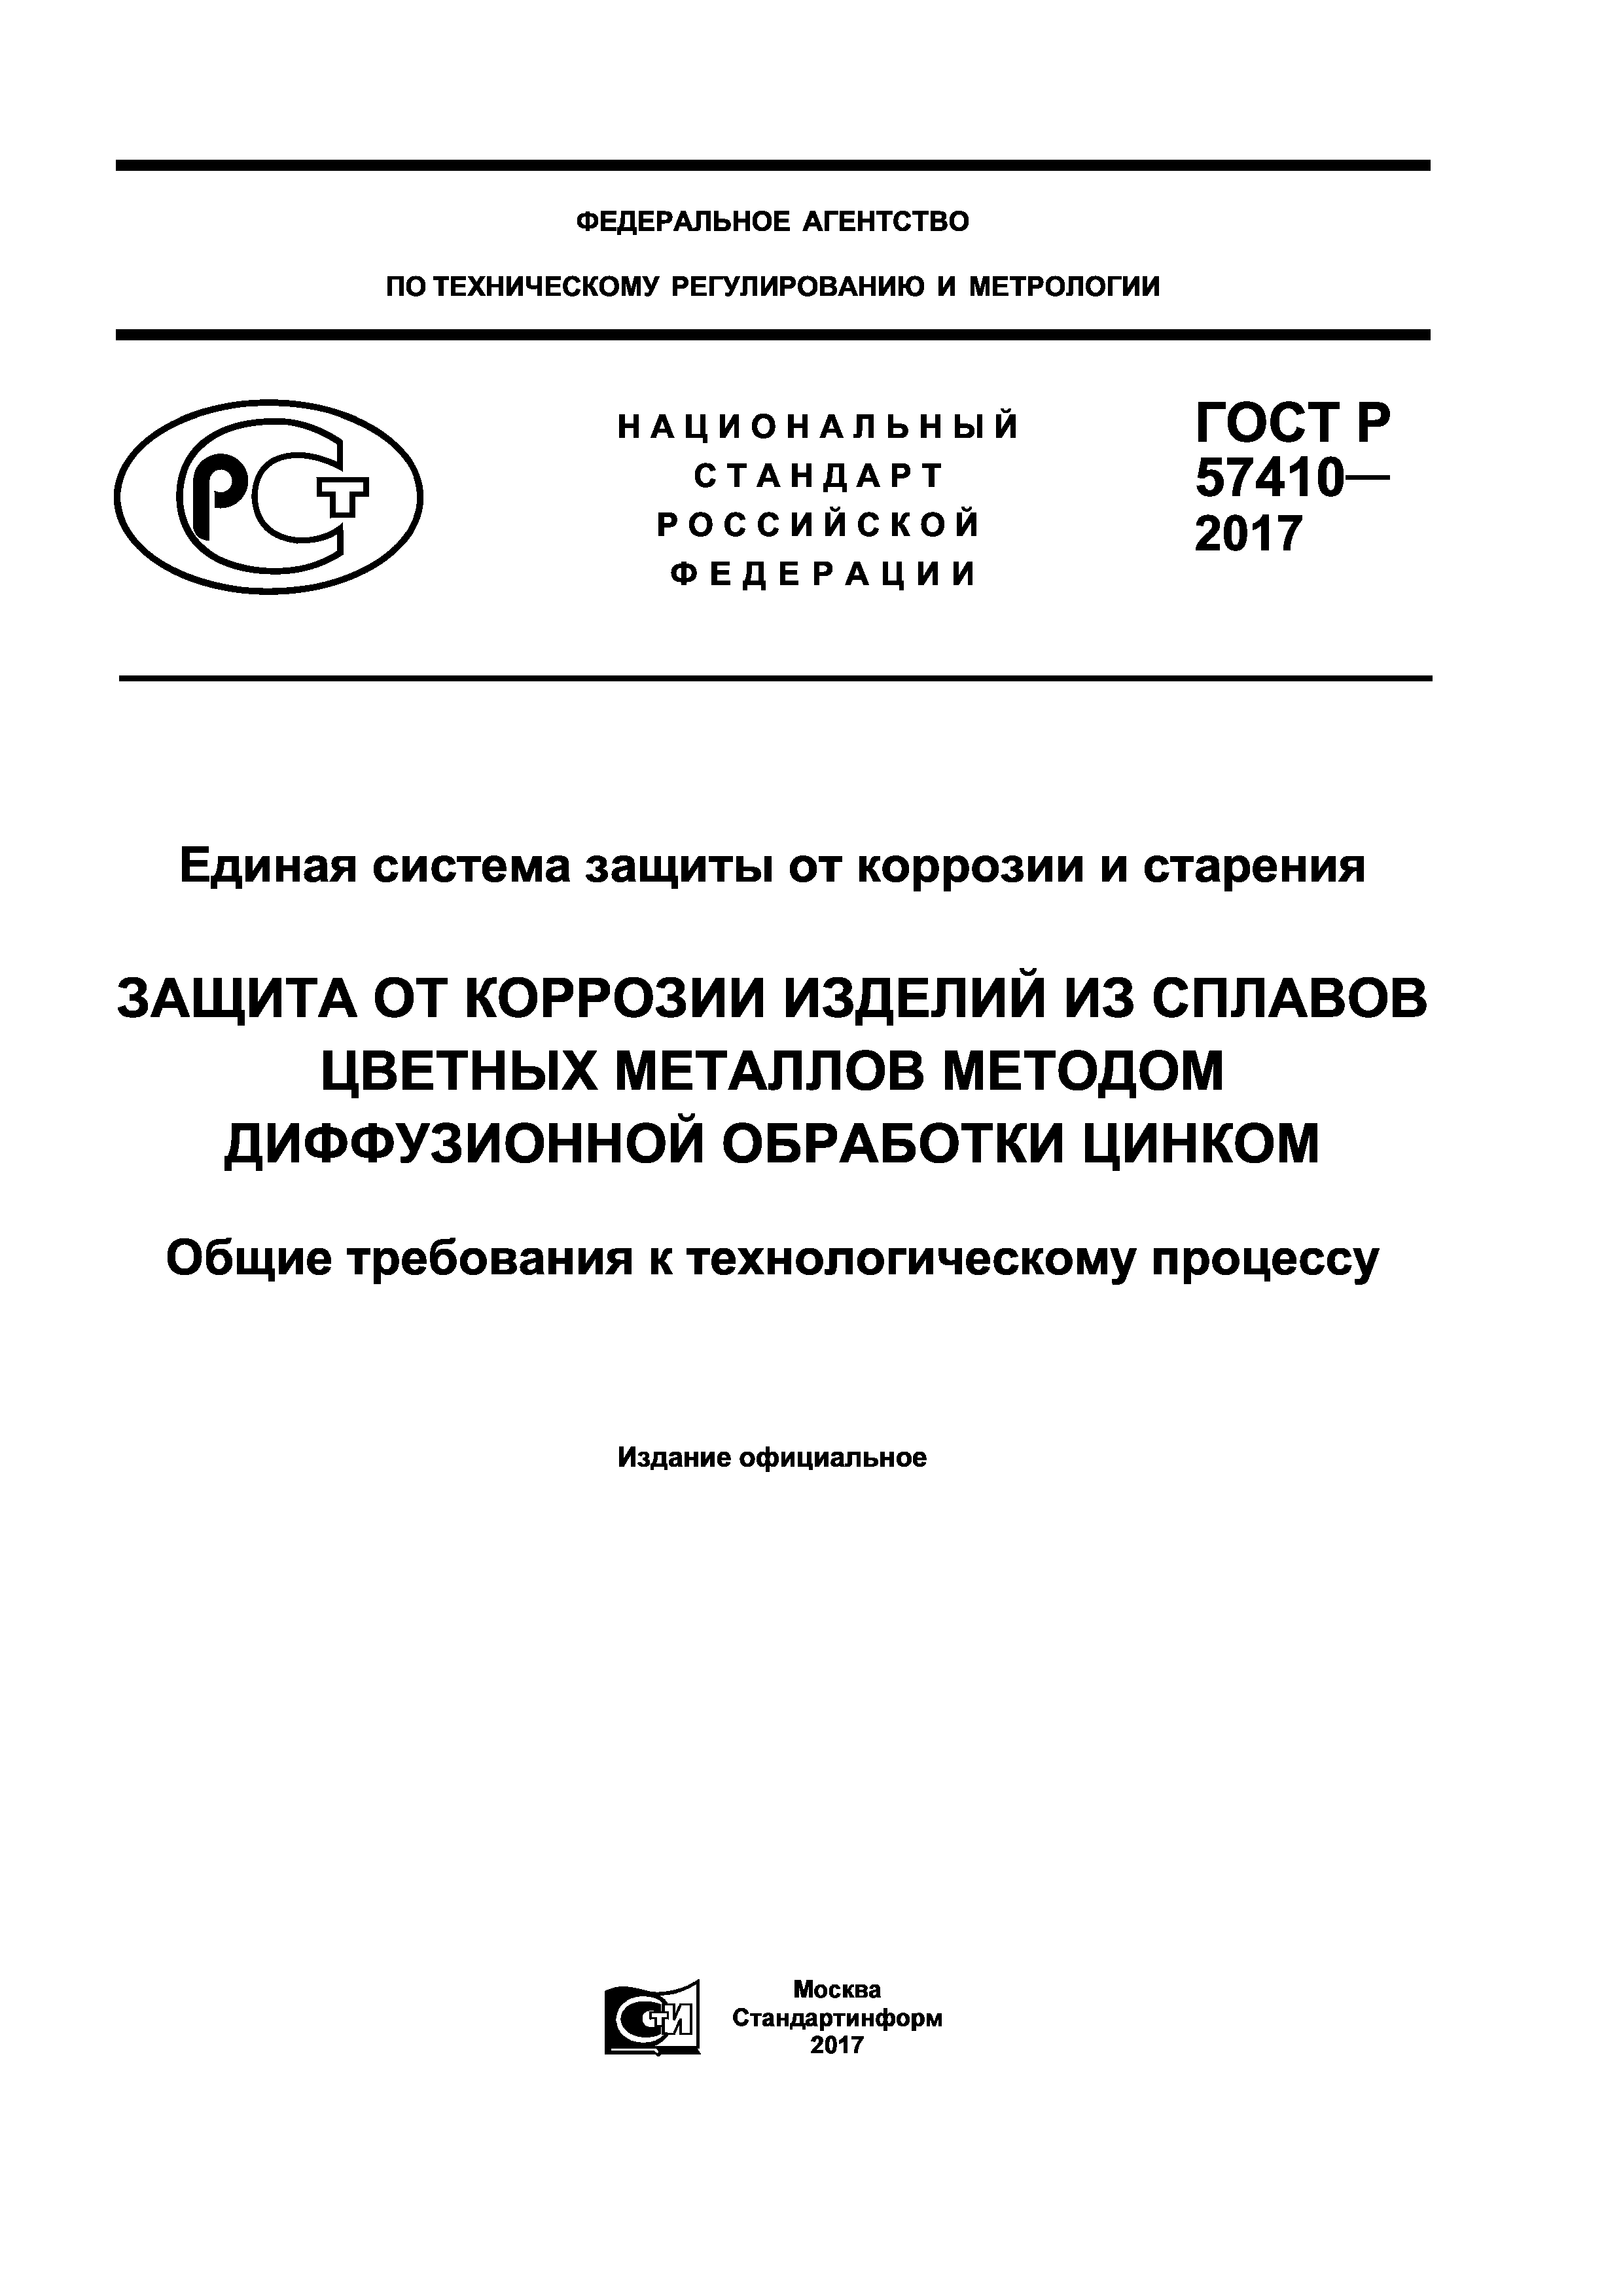 ГОСТ Р 57410-2017